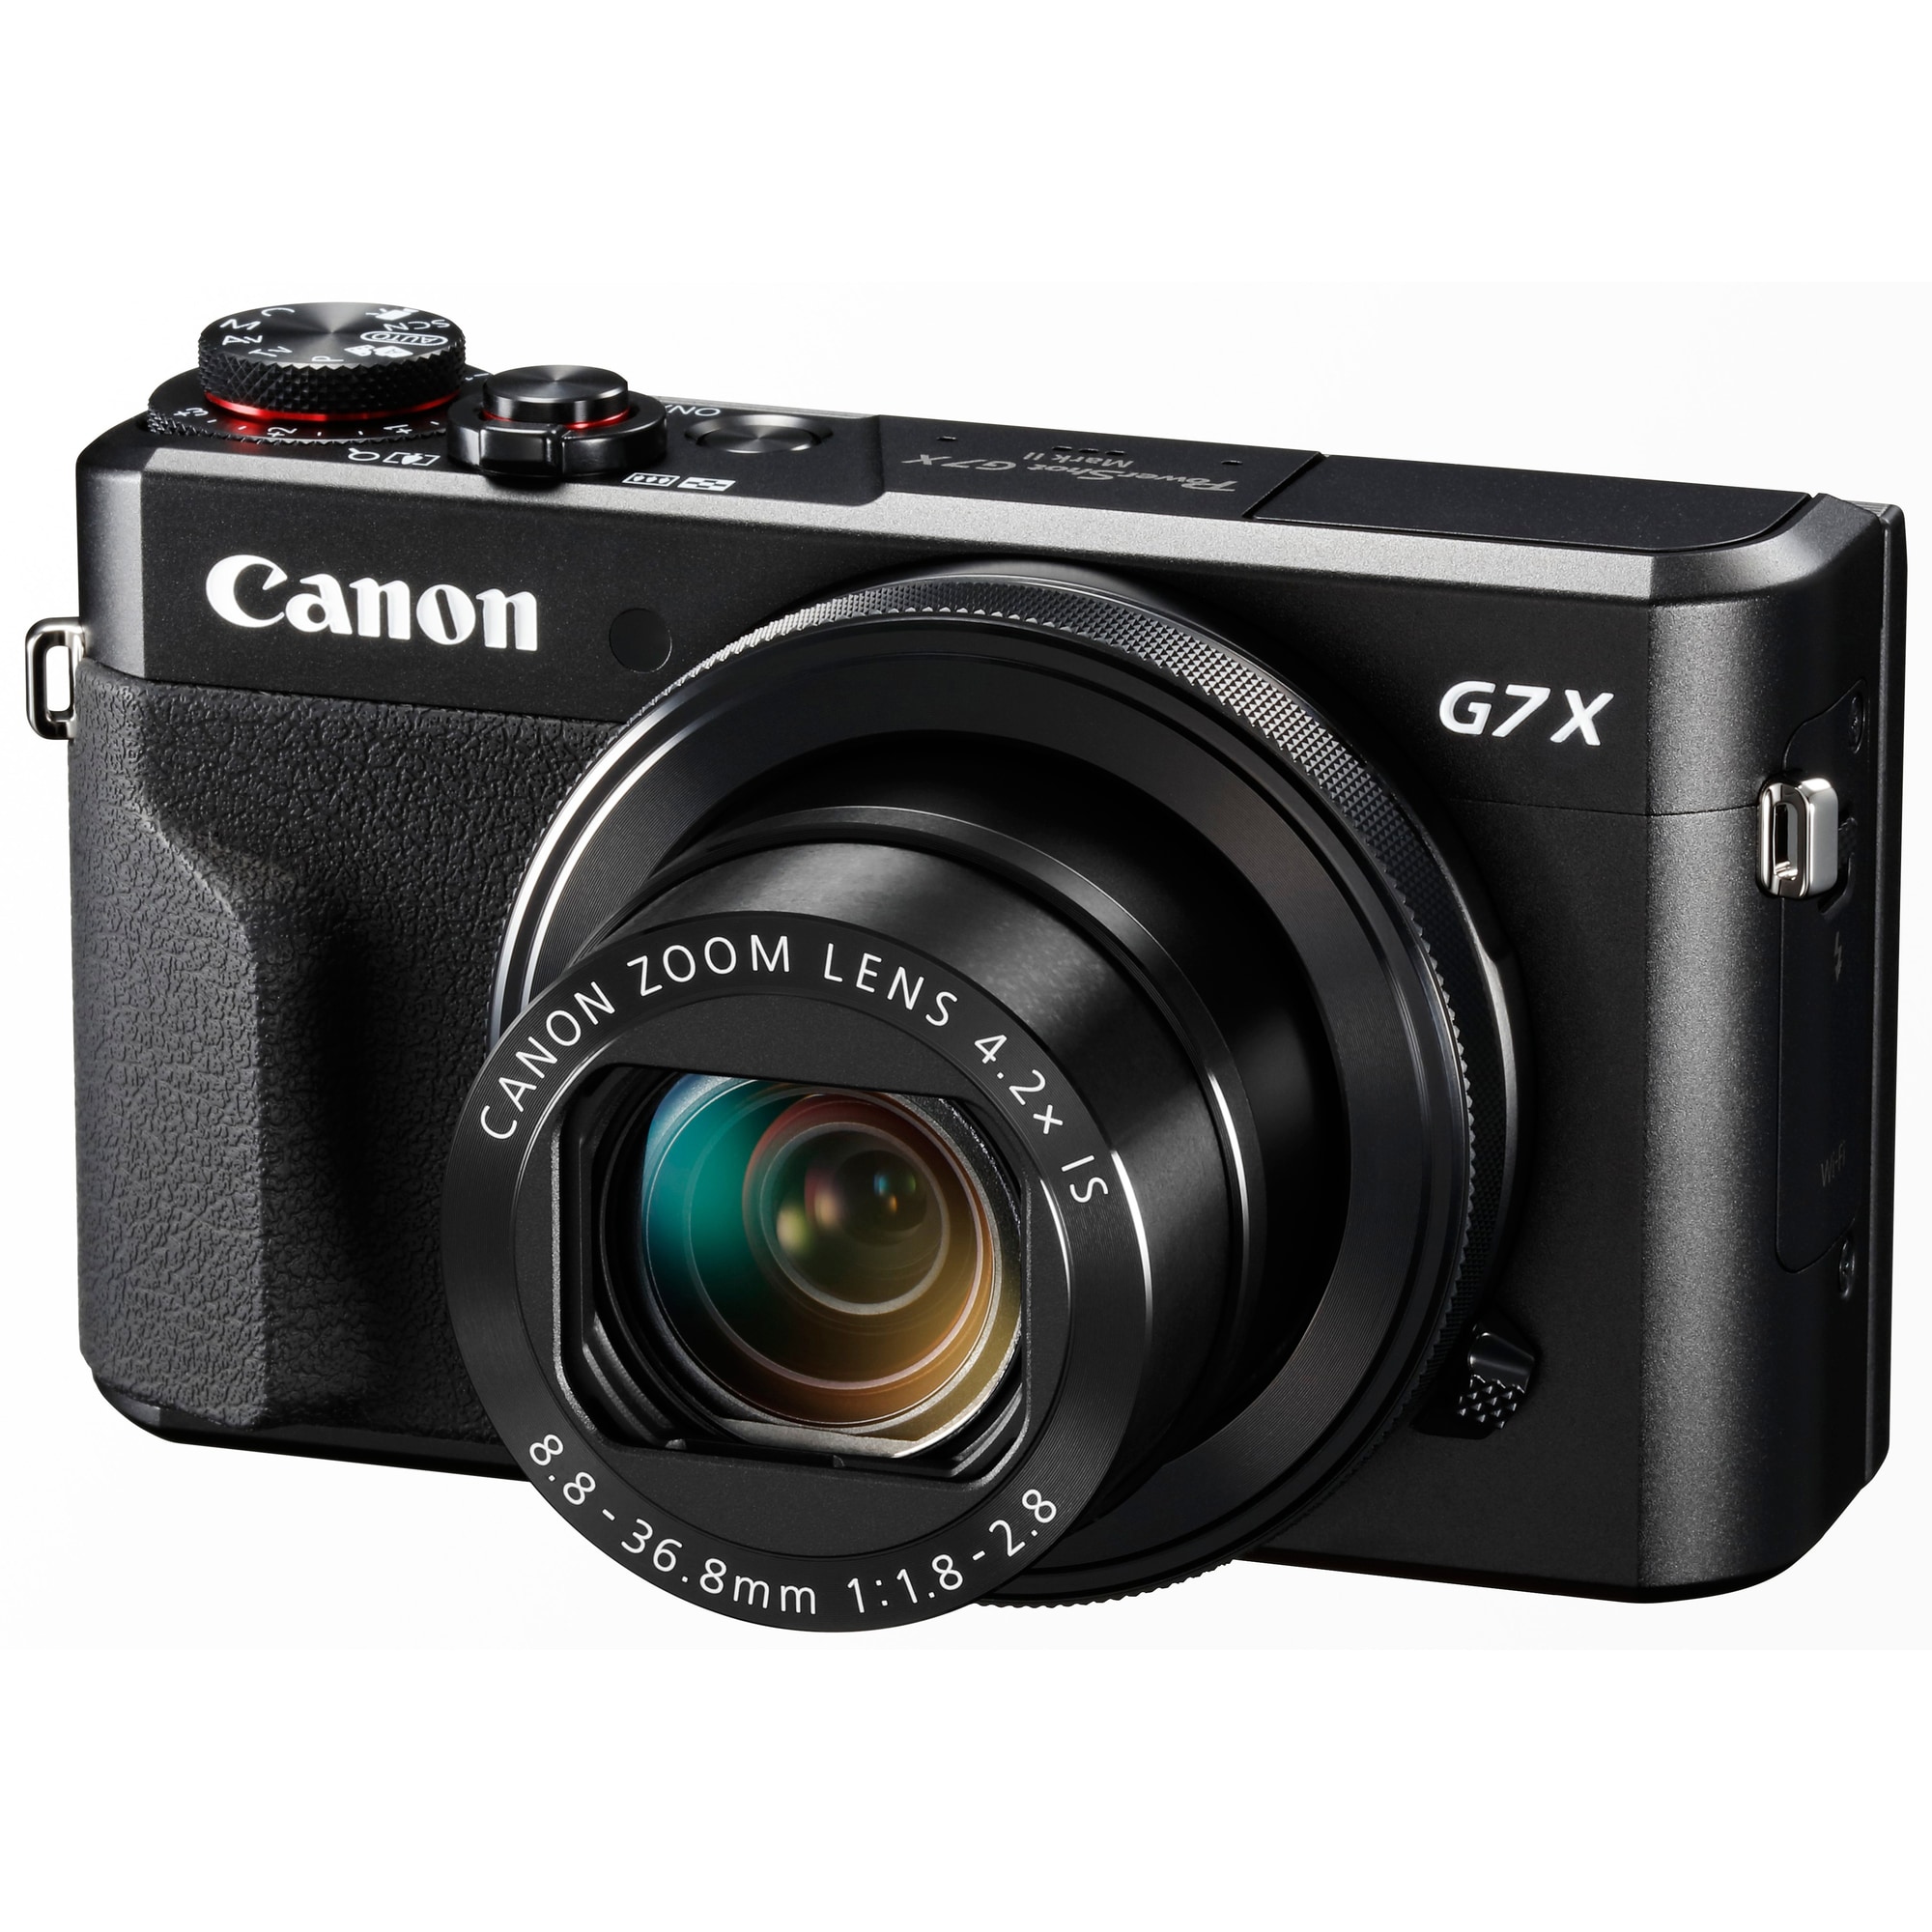 Kamera – billige digitalkamera hos Elgiganten - Elgiganten